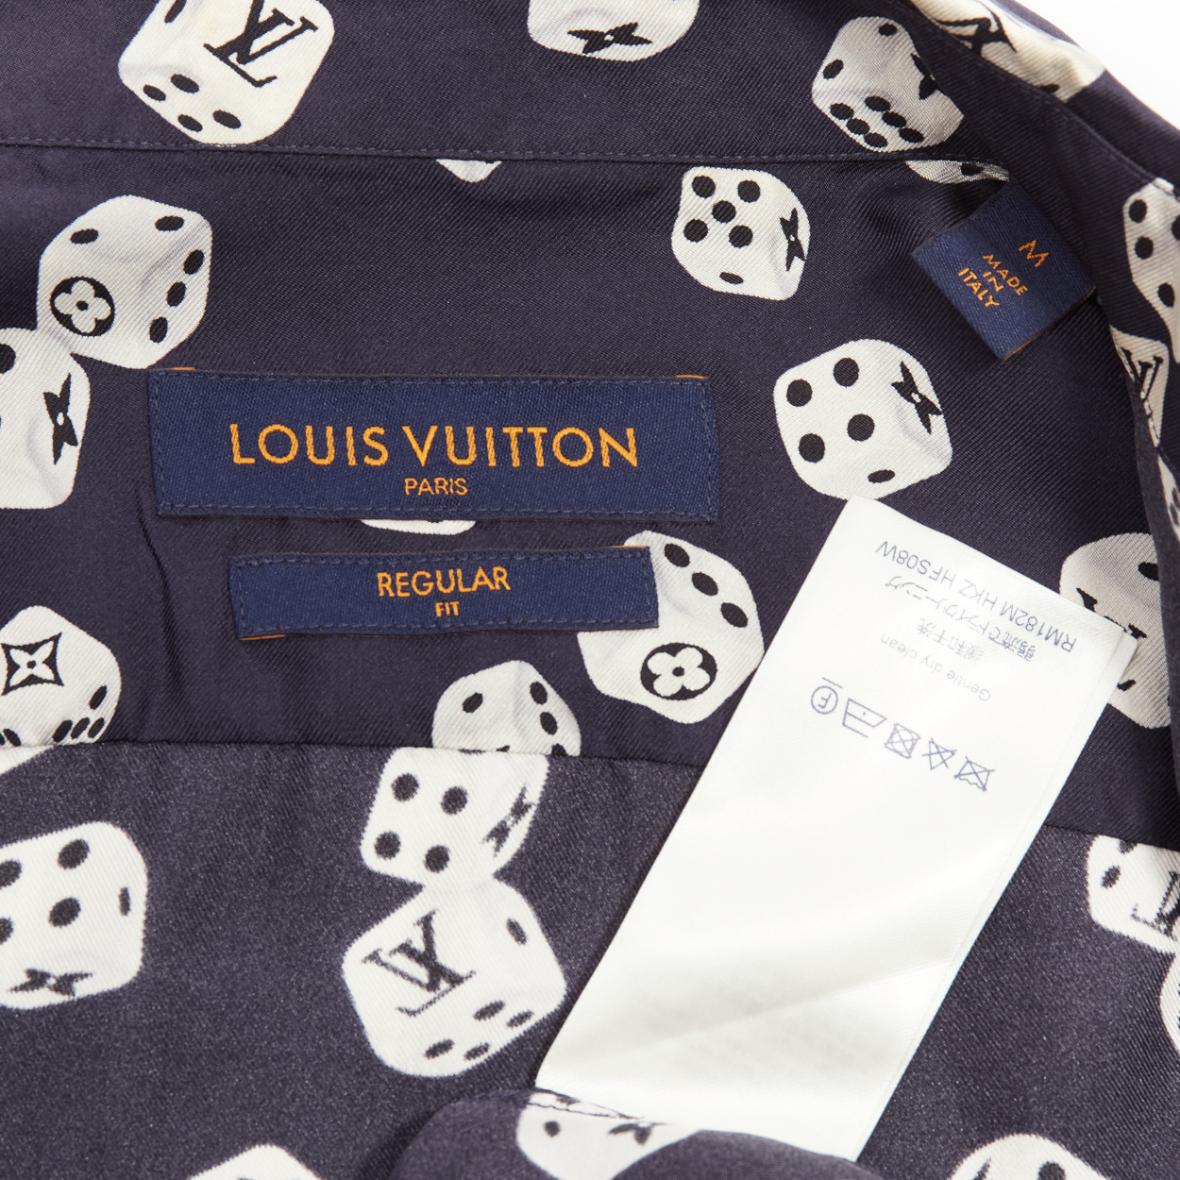 LOUIS VUITTON navy cream 100% silk LV logo dice print regular fit shirt M For Sale 4